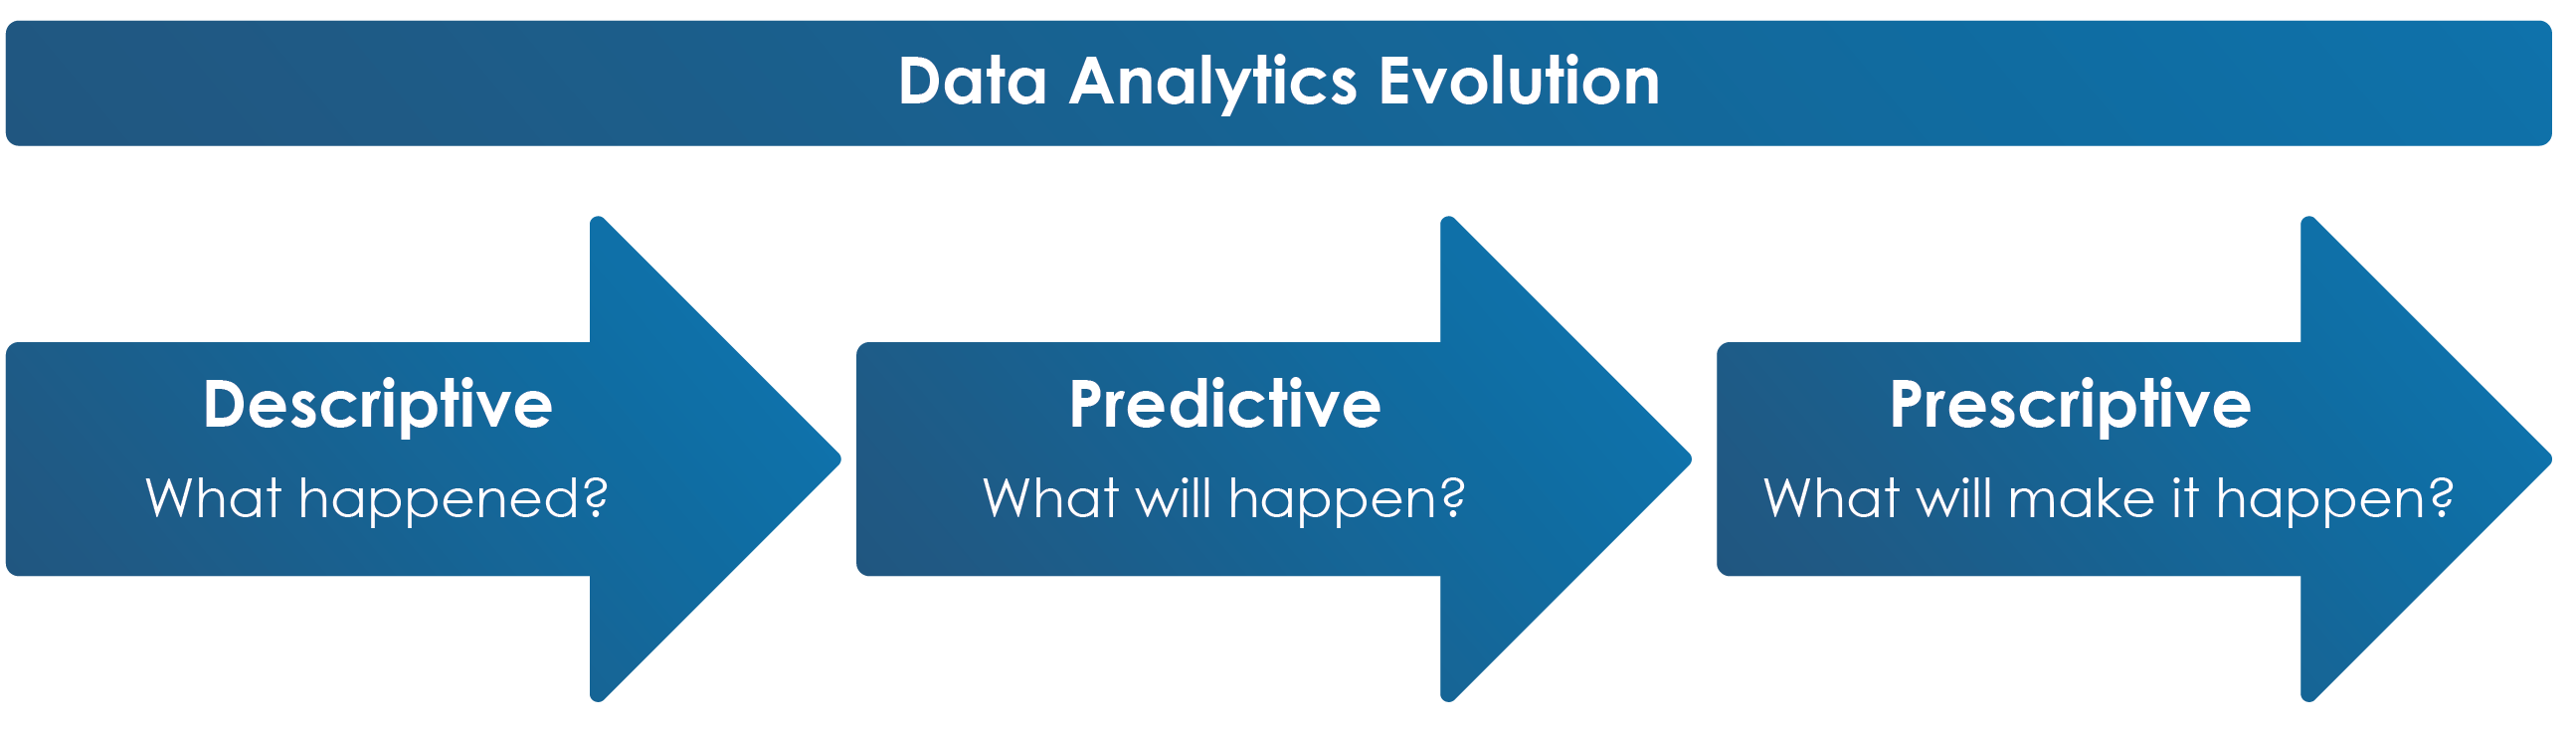 data analytics evolution